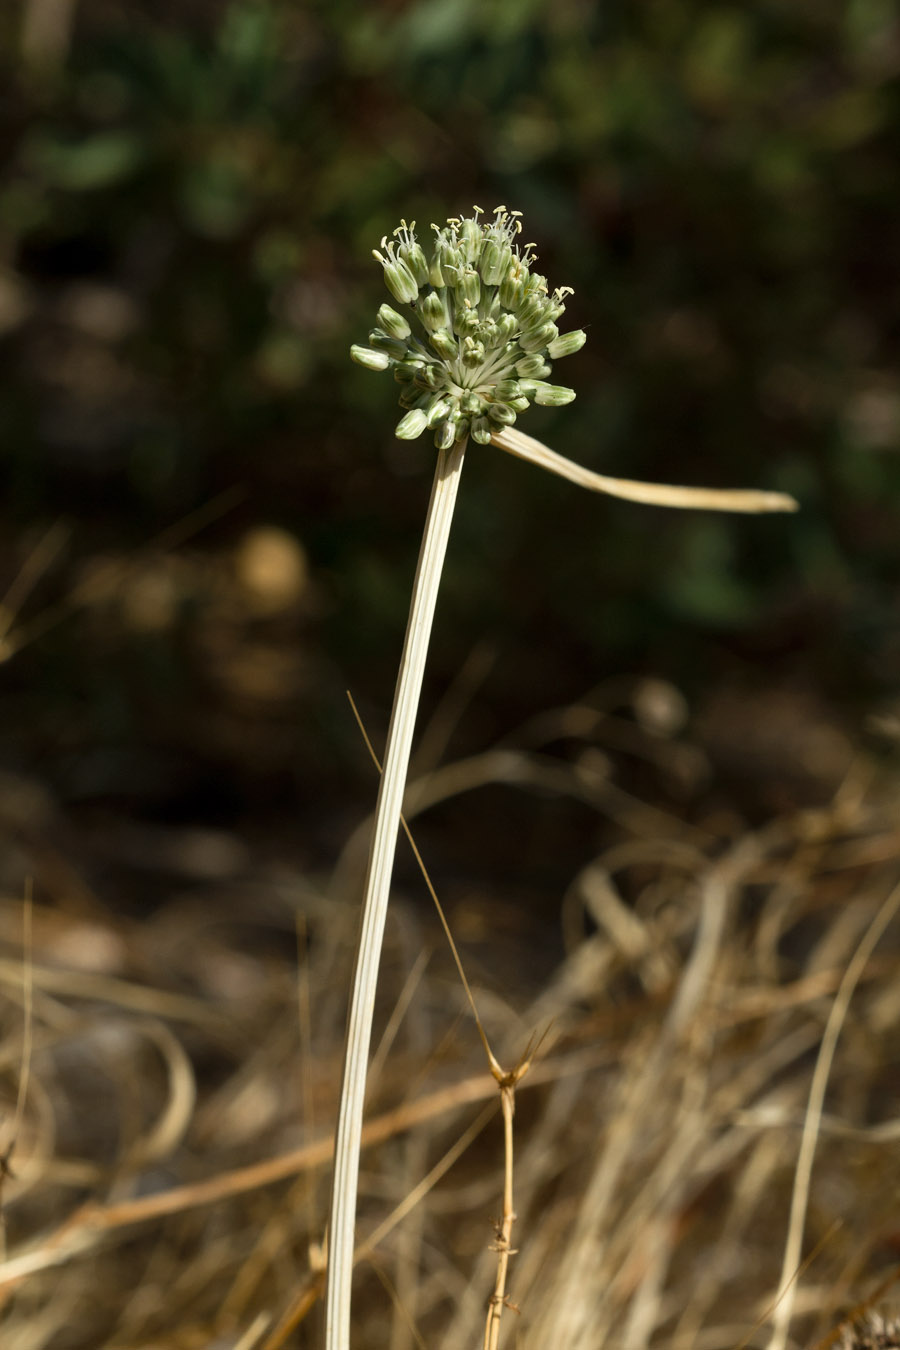 Image of Allium chamaespathum specimen.